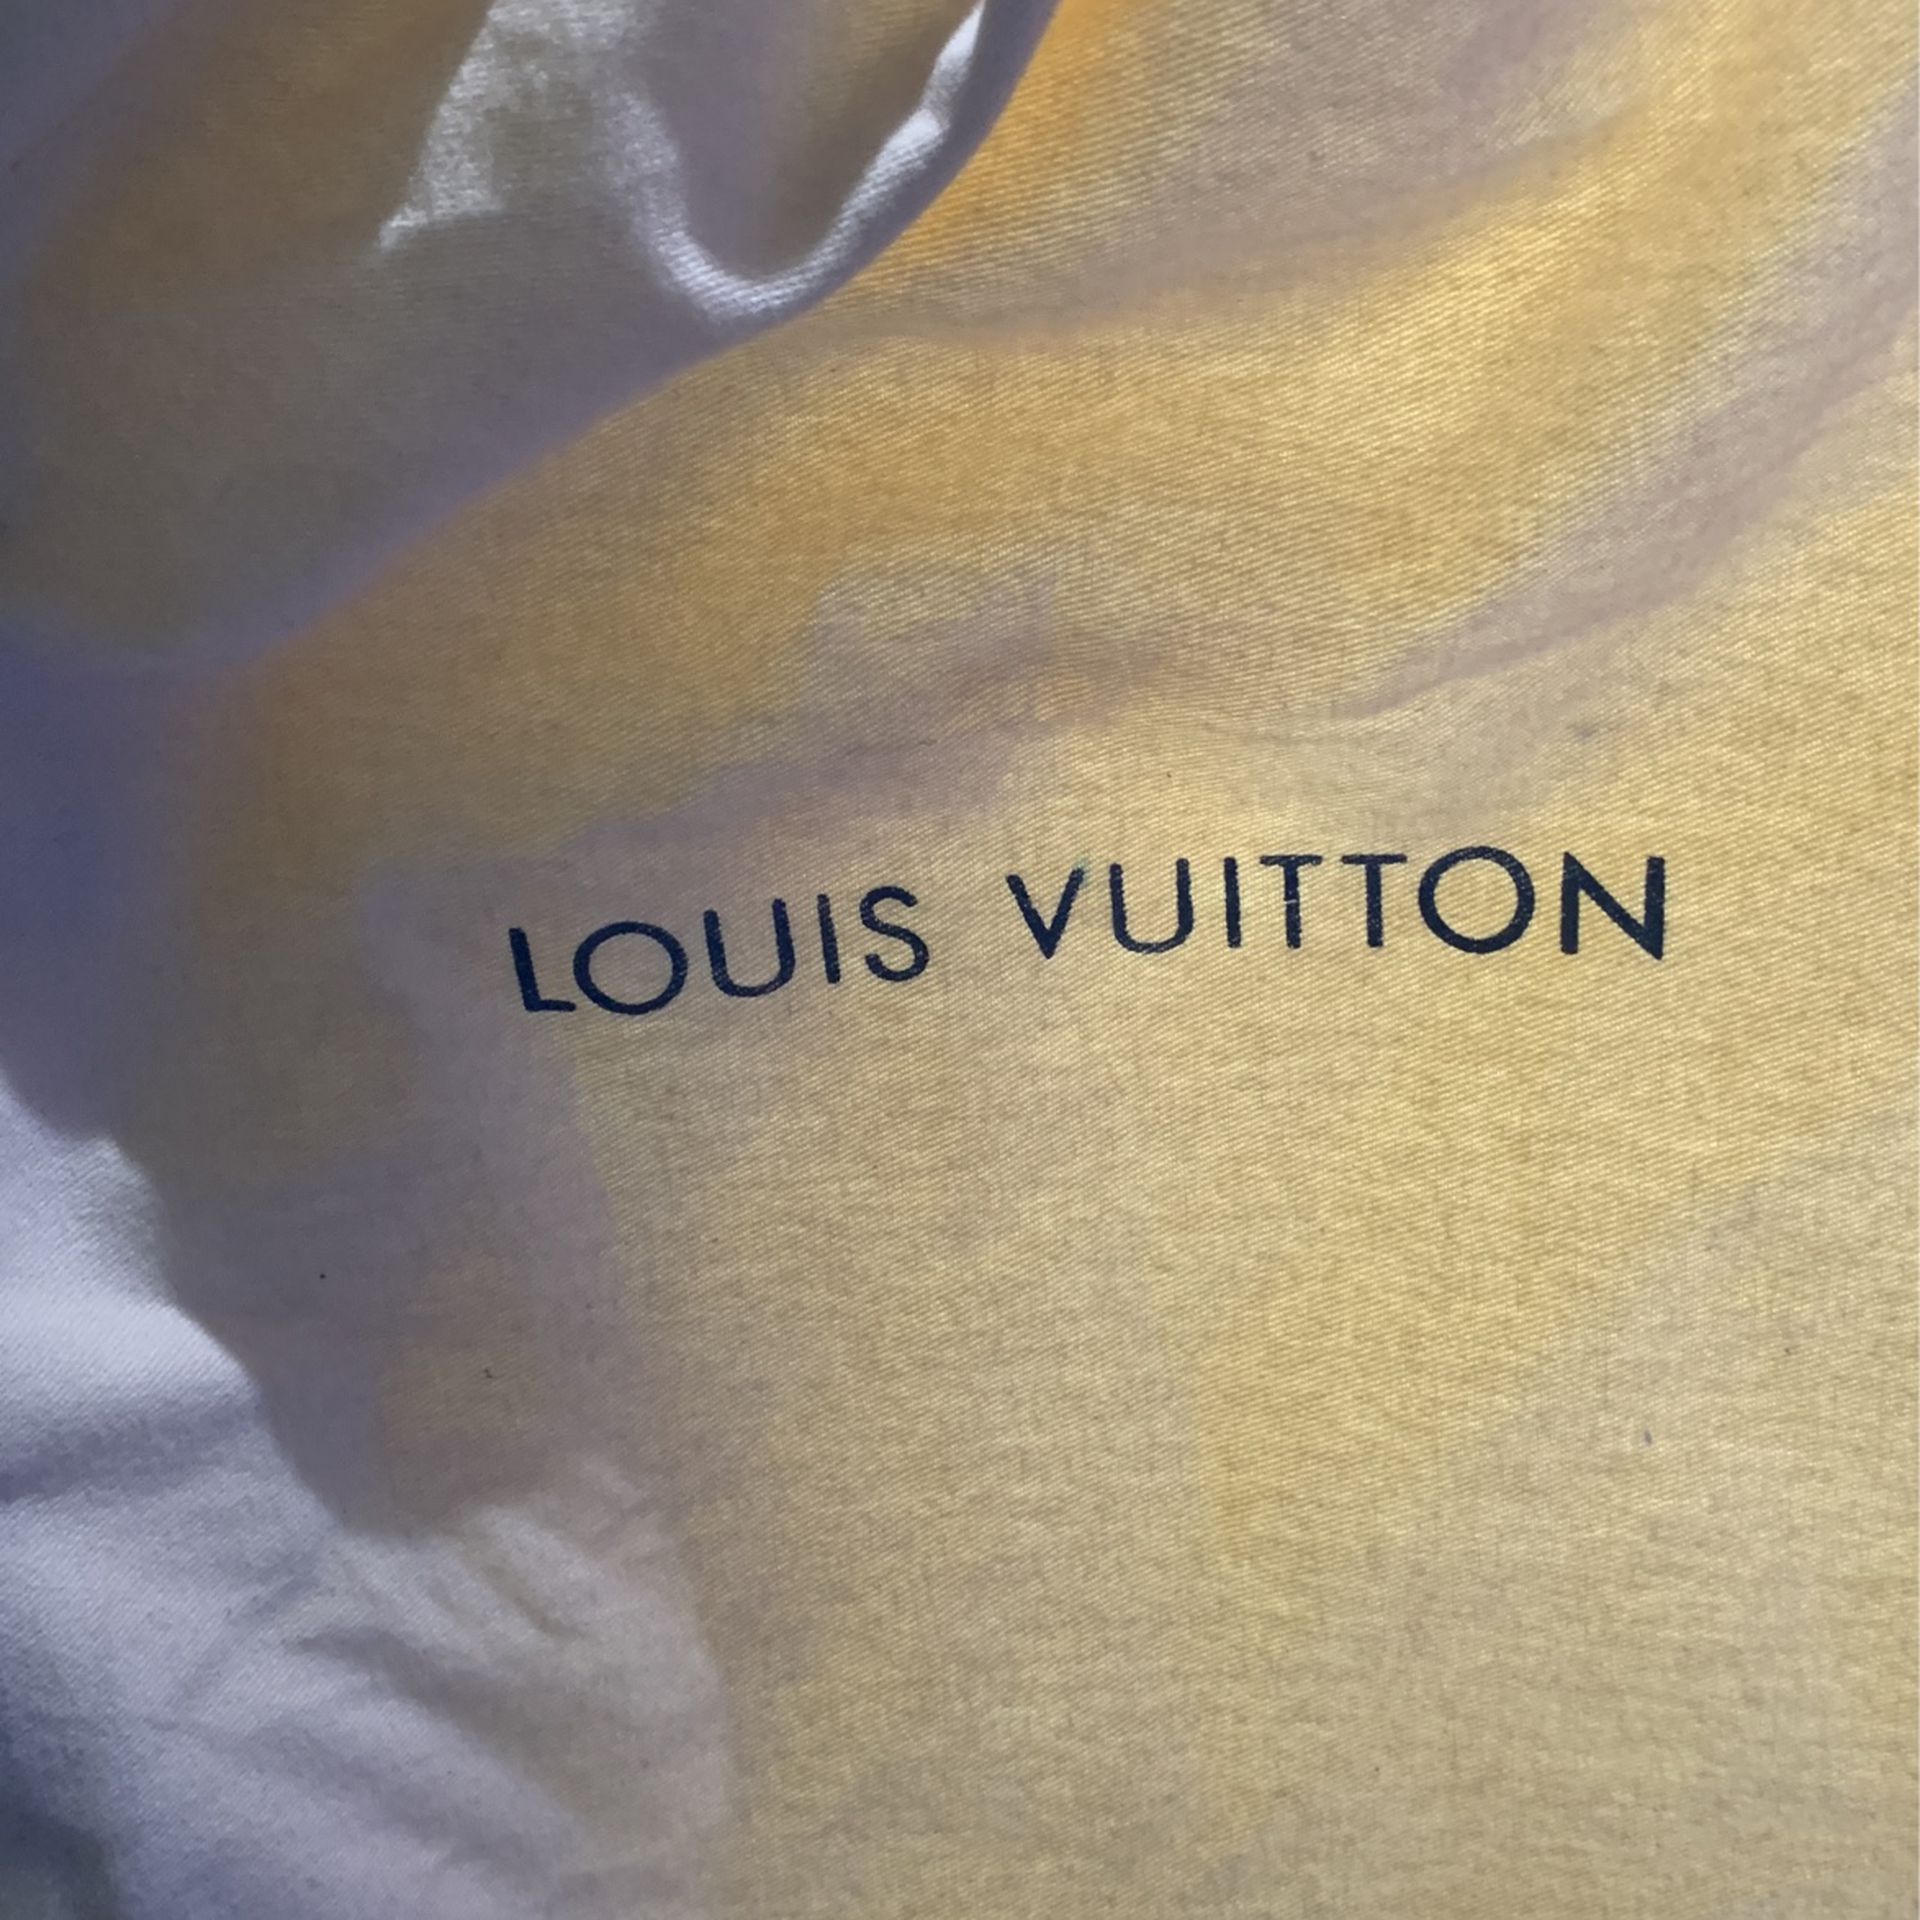 Louis Vuitton 408 Trainers for Sale in Elizabeth, NJ - OfferUp